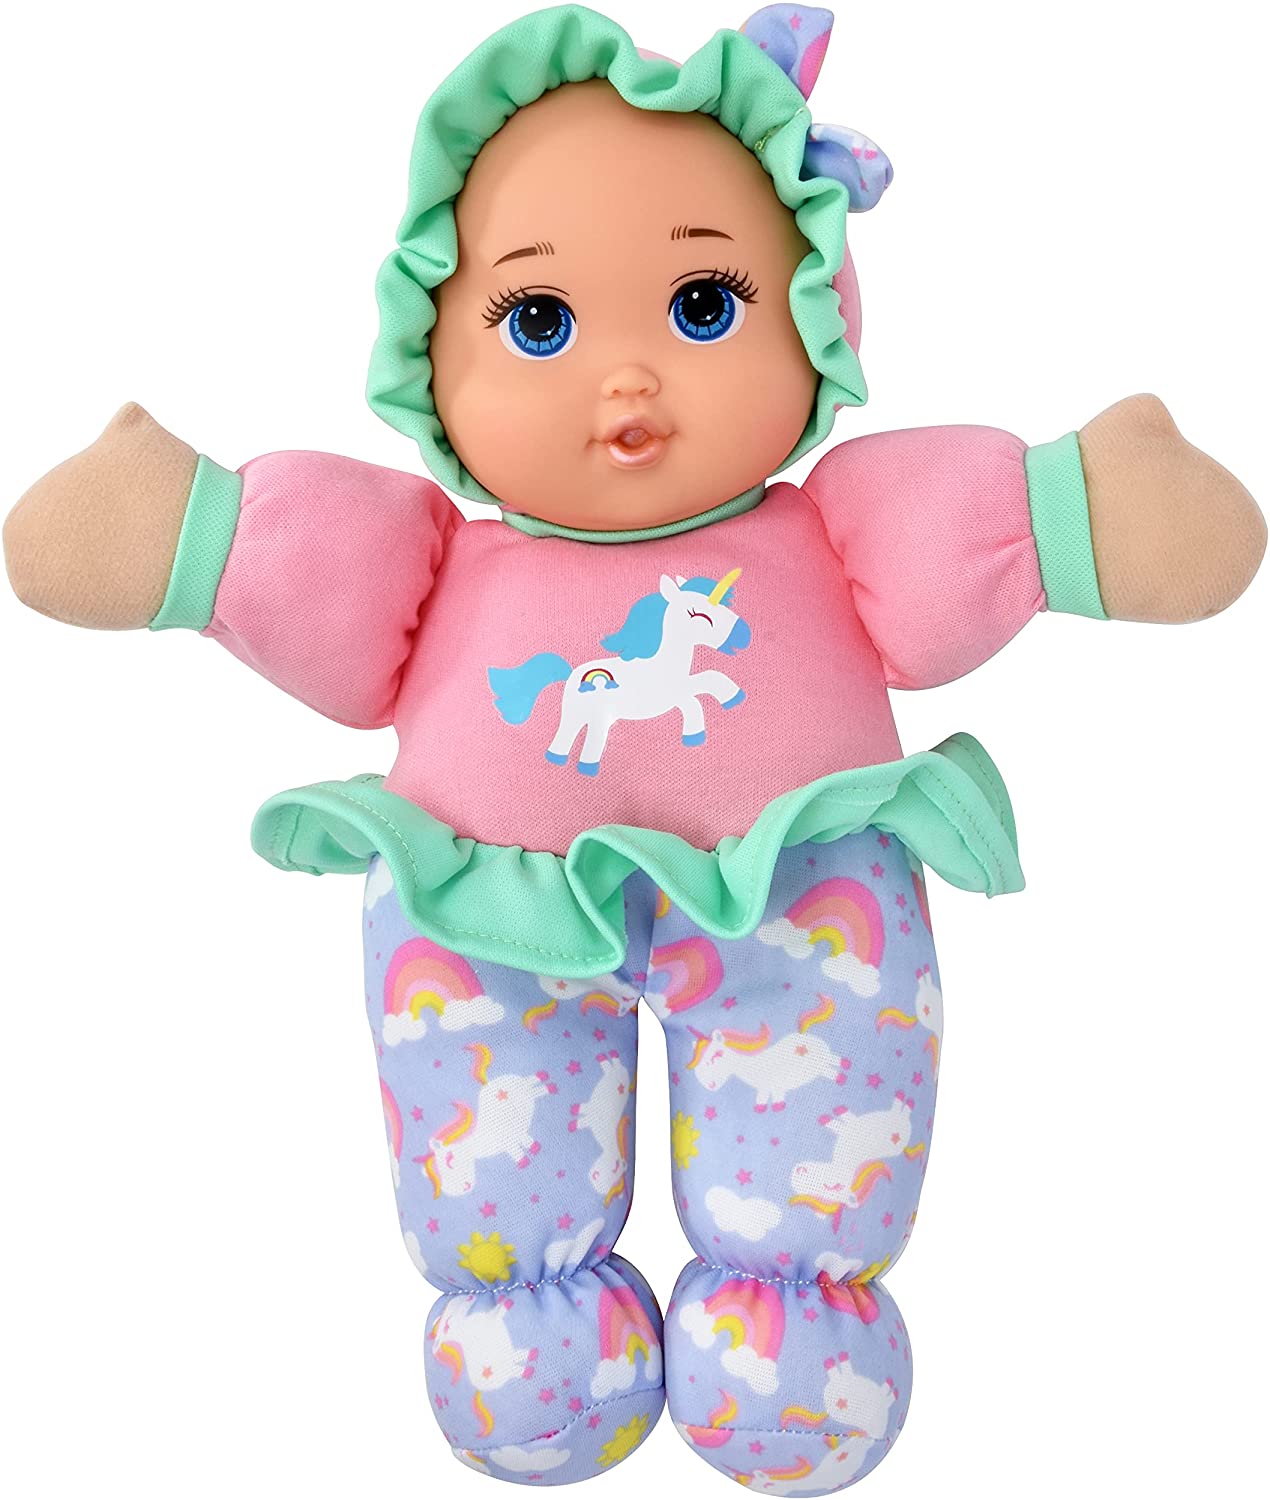 Cartoon Baby Doll Cartoon Online Store, Save 61% 